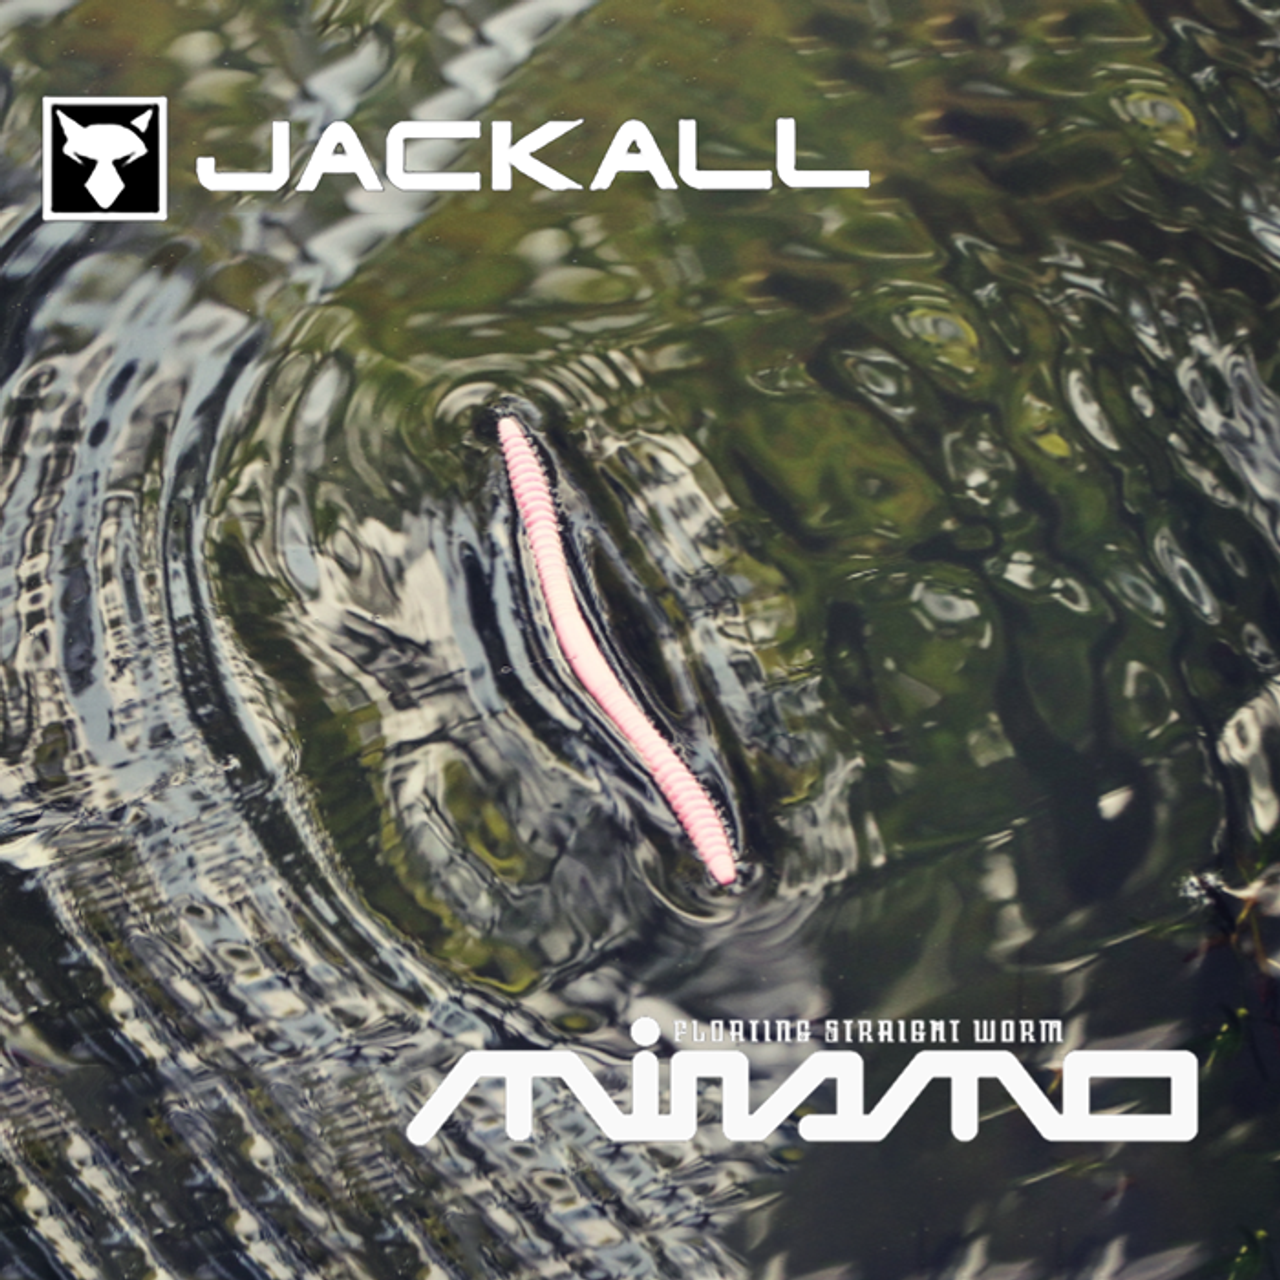 Jackall MINAMO 6 Floating Worm NEW